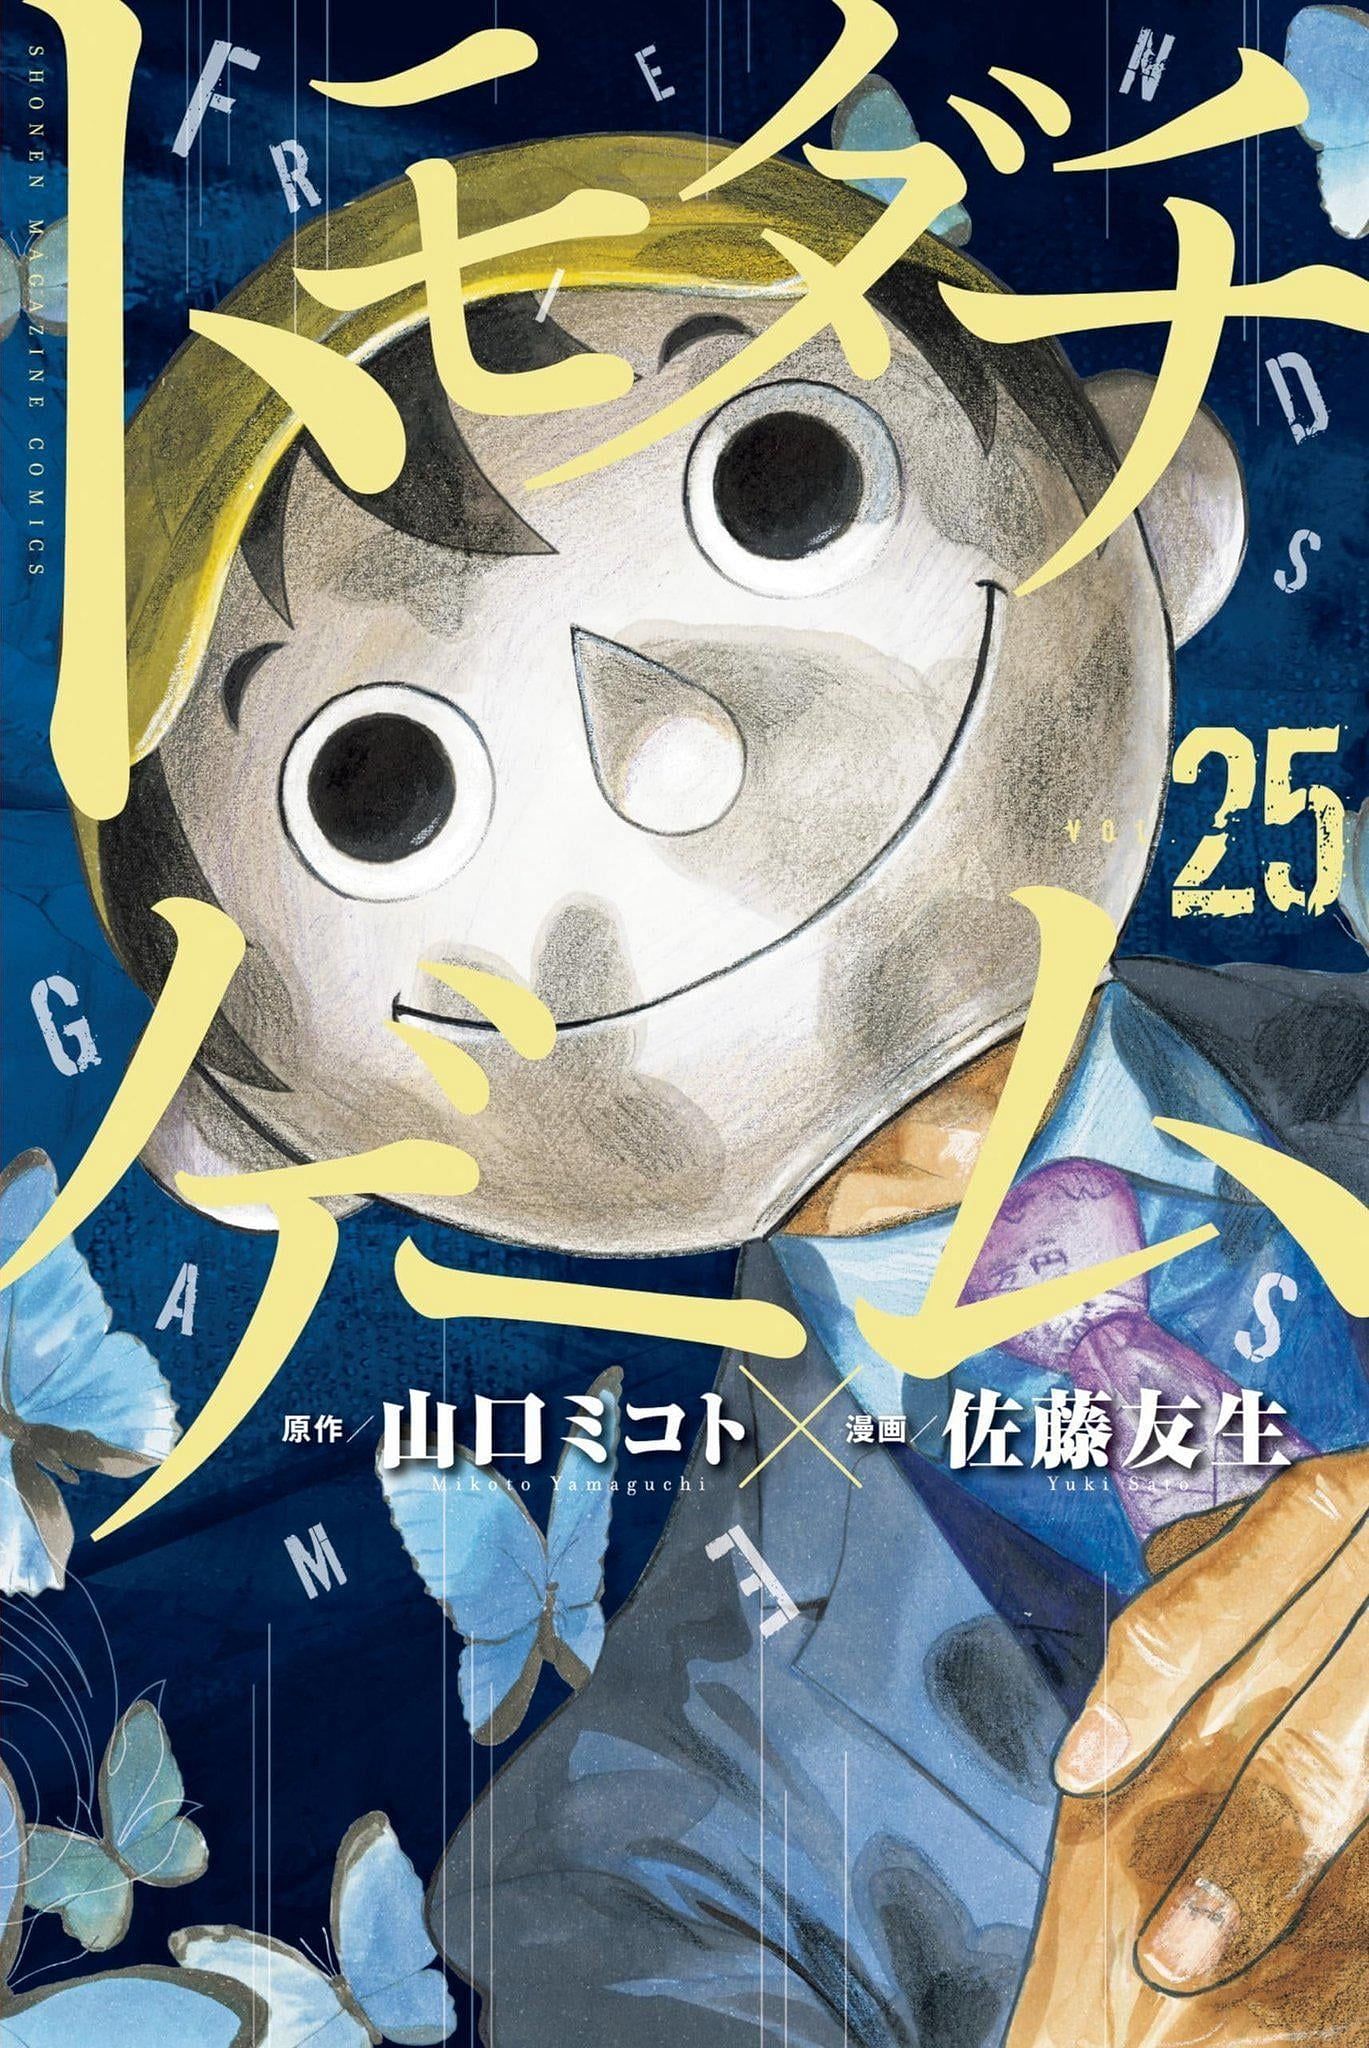 Cover of Tomodachi Game manga volume 25 (Image via Kodansha/Yuki Sato)